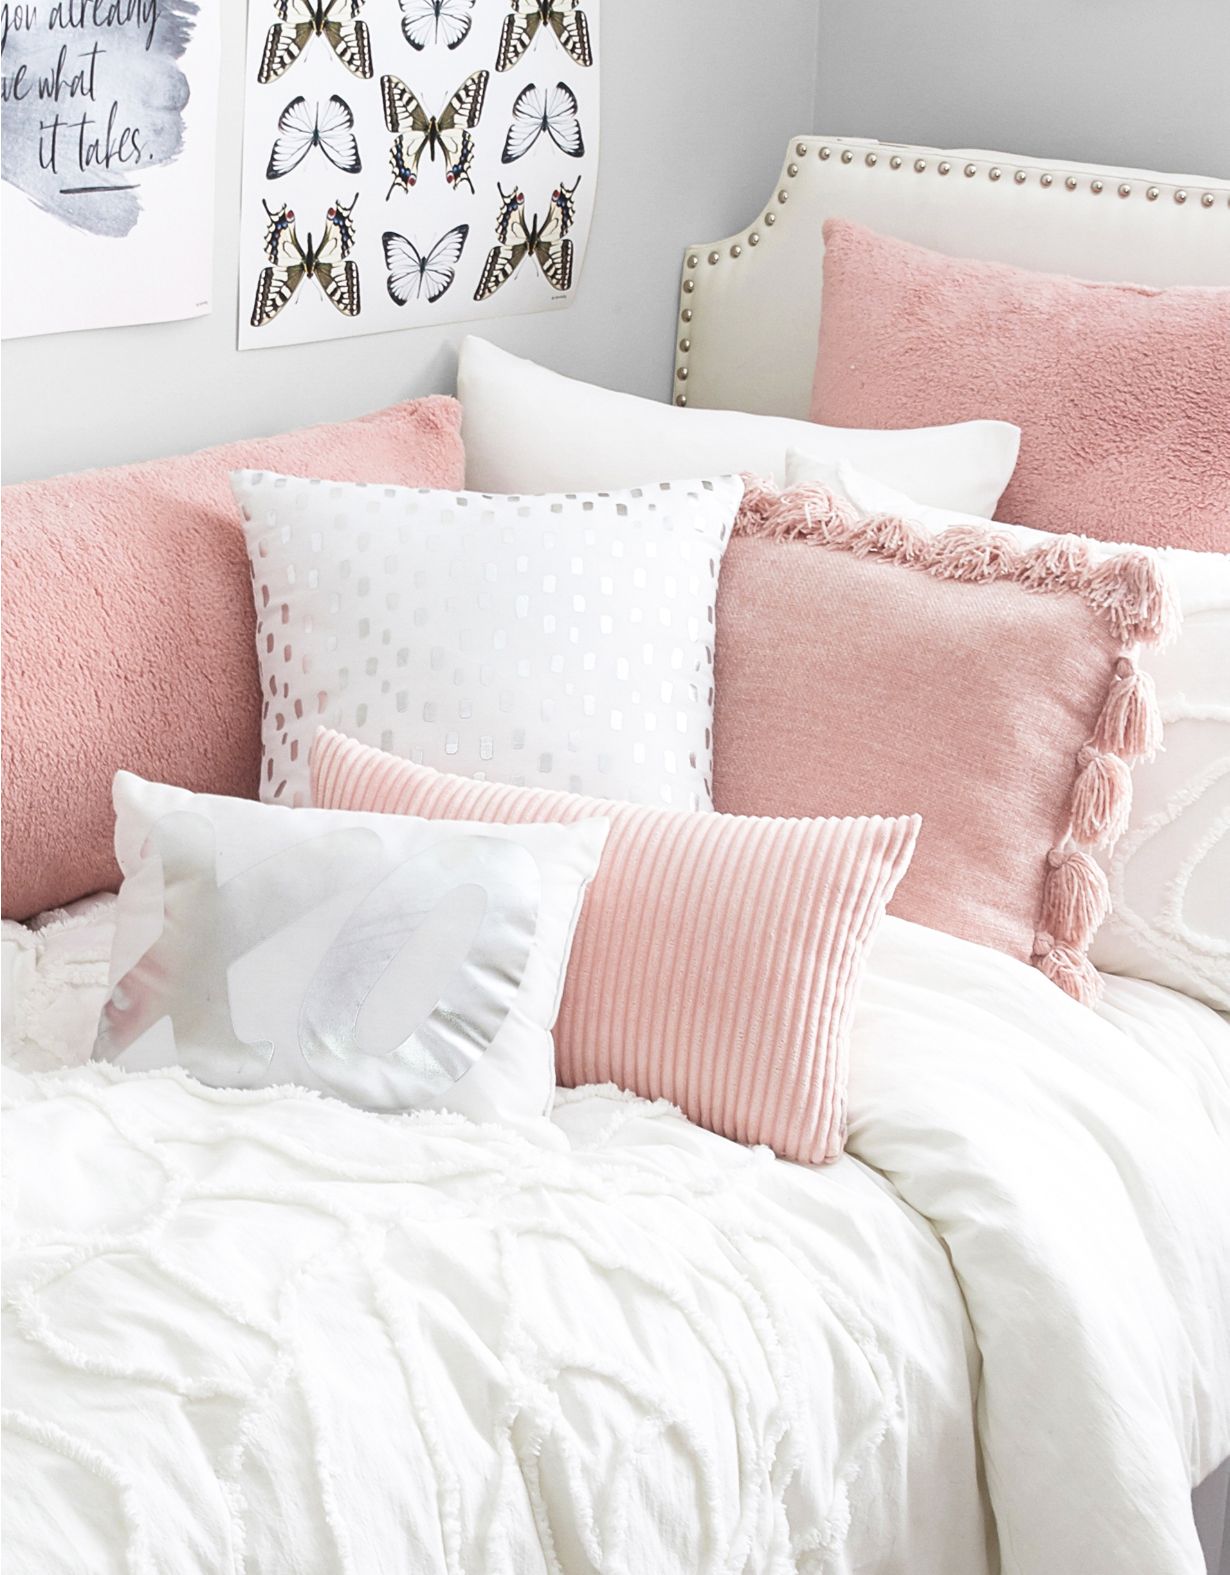 Dormify Cozy Cord Pillow